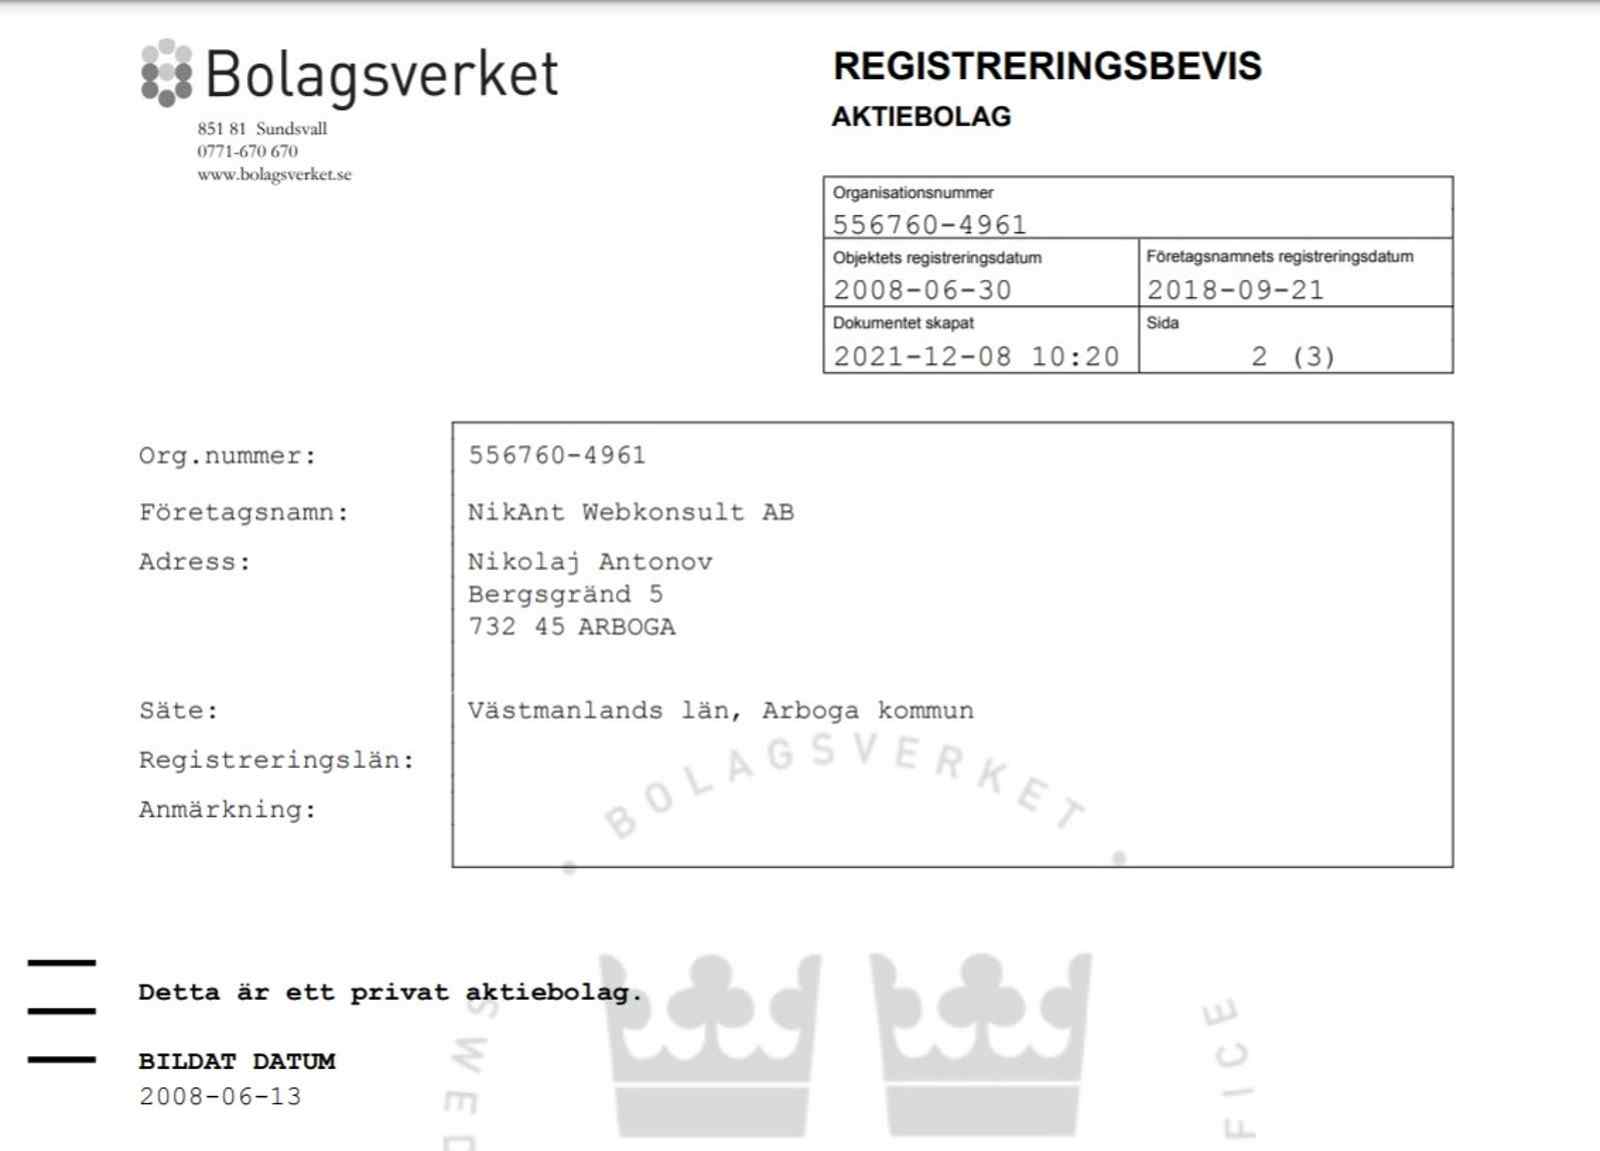 The registration certificate of Bolagsverket to Marketing Agency NikAnt Webkonsult AB